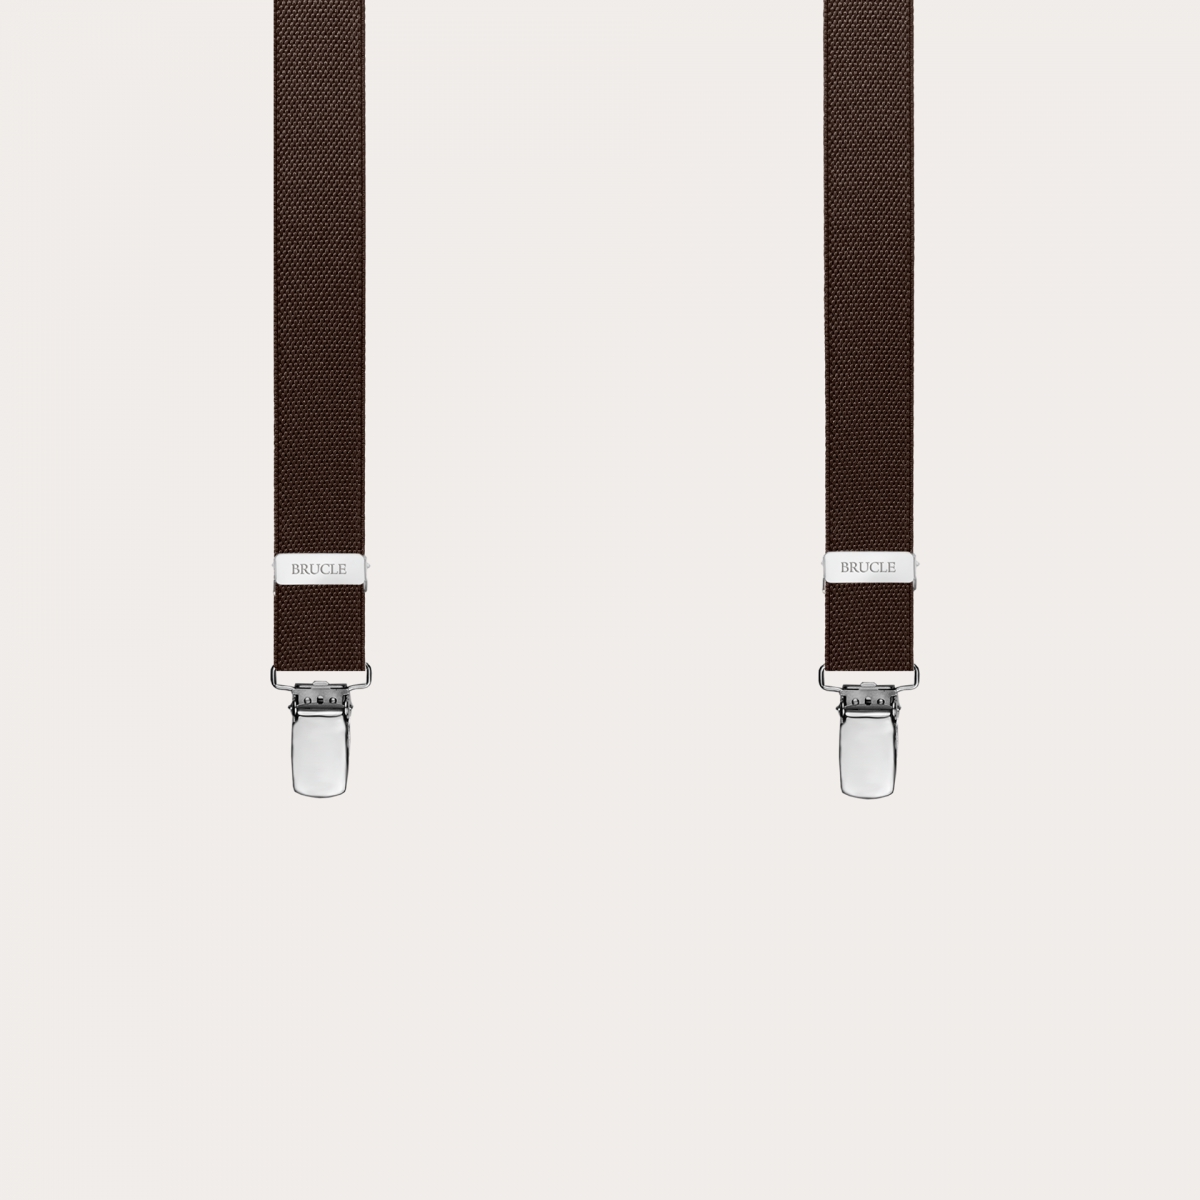 BRUCLE Unisex Y-shaped suspenders for children and teenagers, dark brown